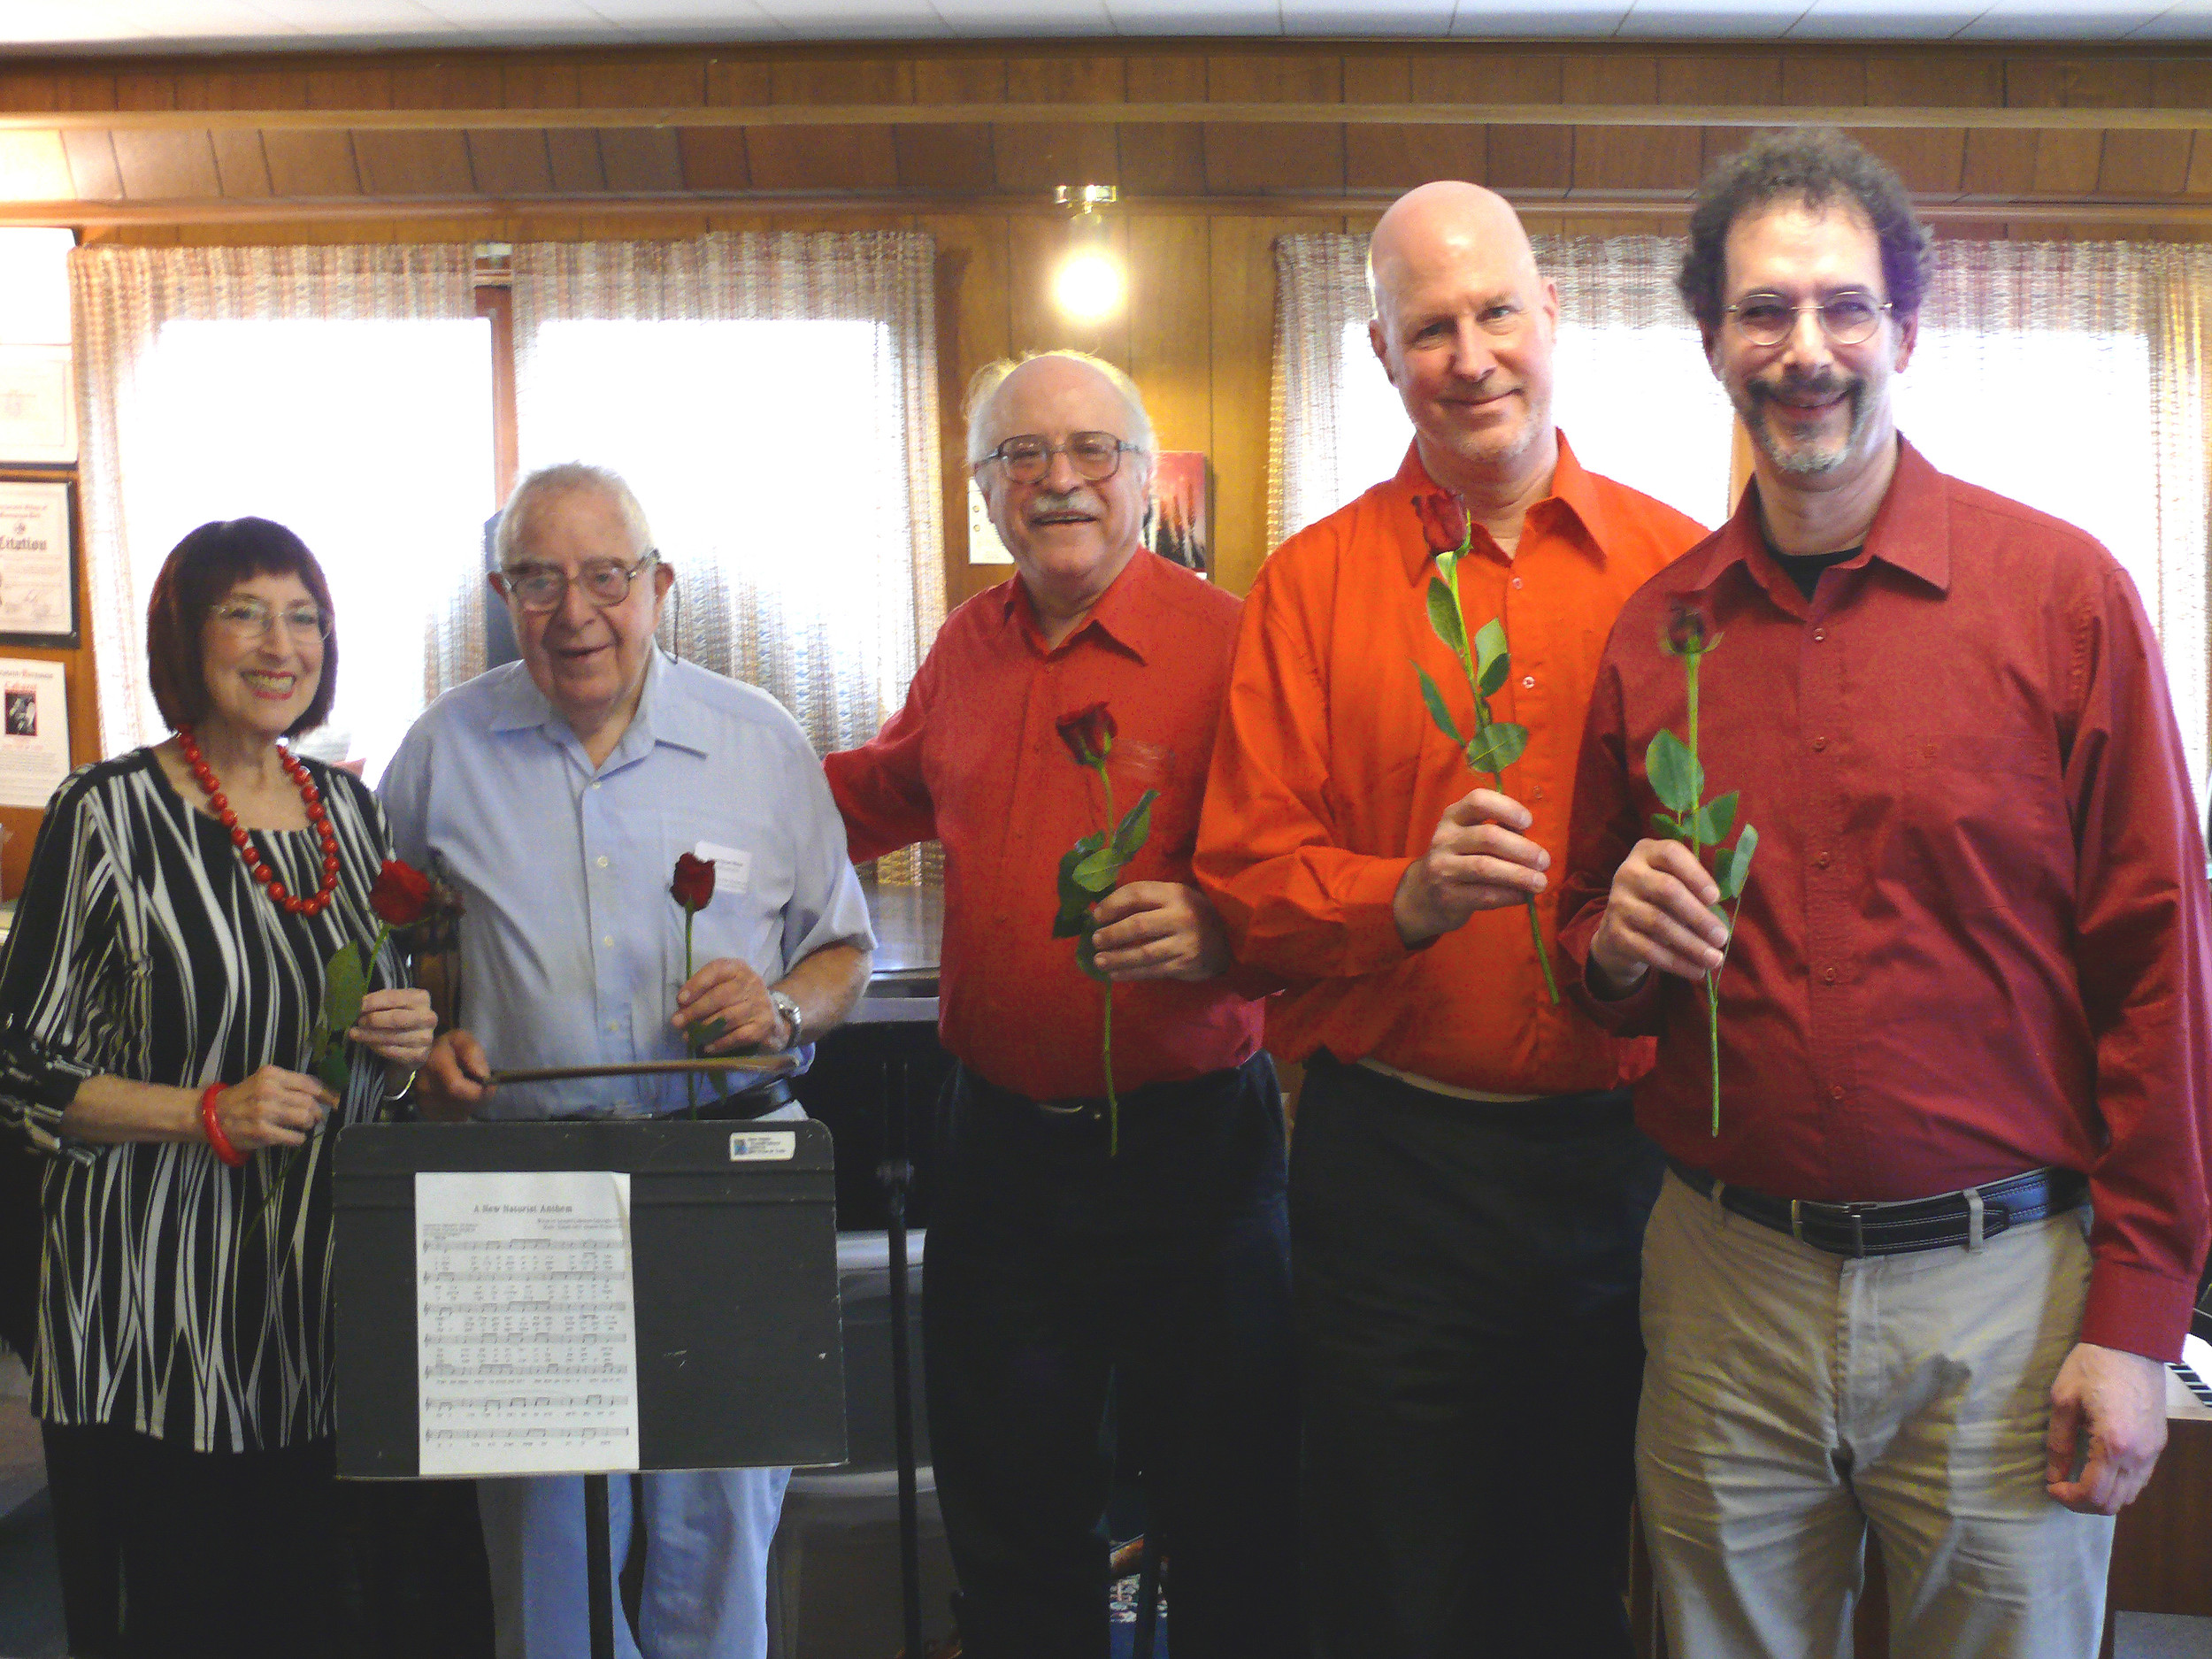 Roses were passed around after the concert performance Helene Williams, left, Nathaniel S. Lehrman, Leonard Lehrman, Kurt Behnke and Daniel Hyman.